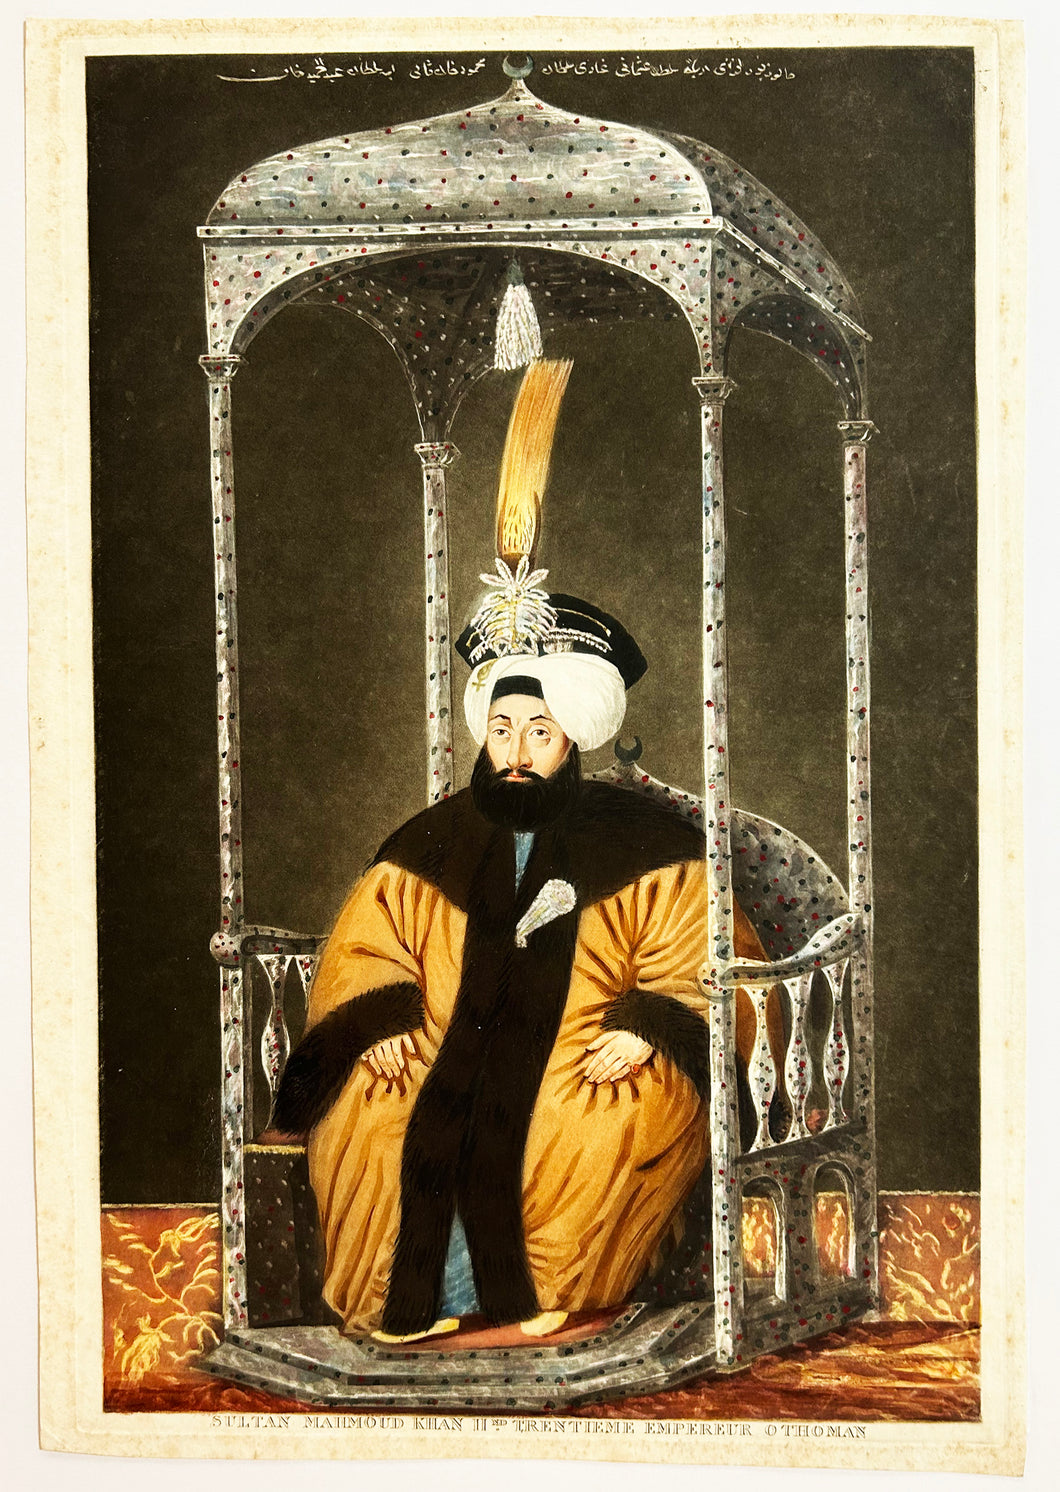 Sultan Mahmoud Khan II trenitième Empereur Ottoman.  1815.